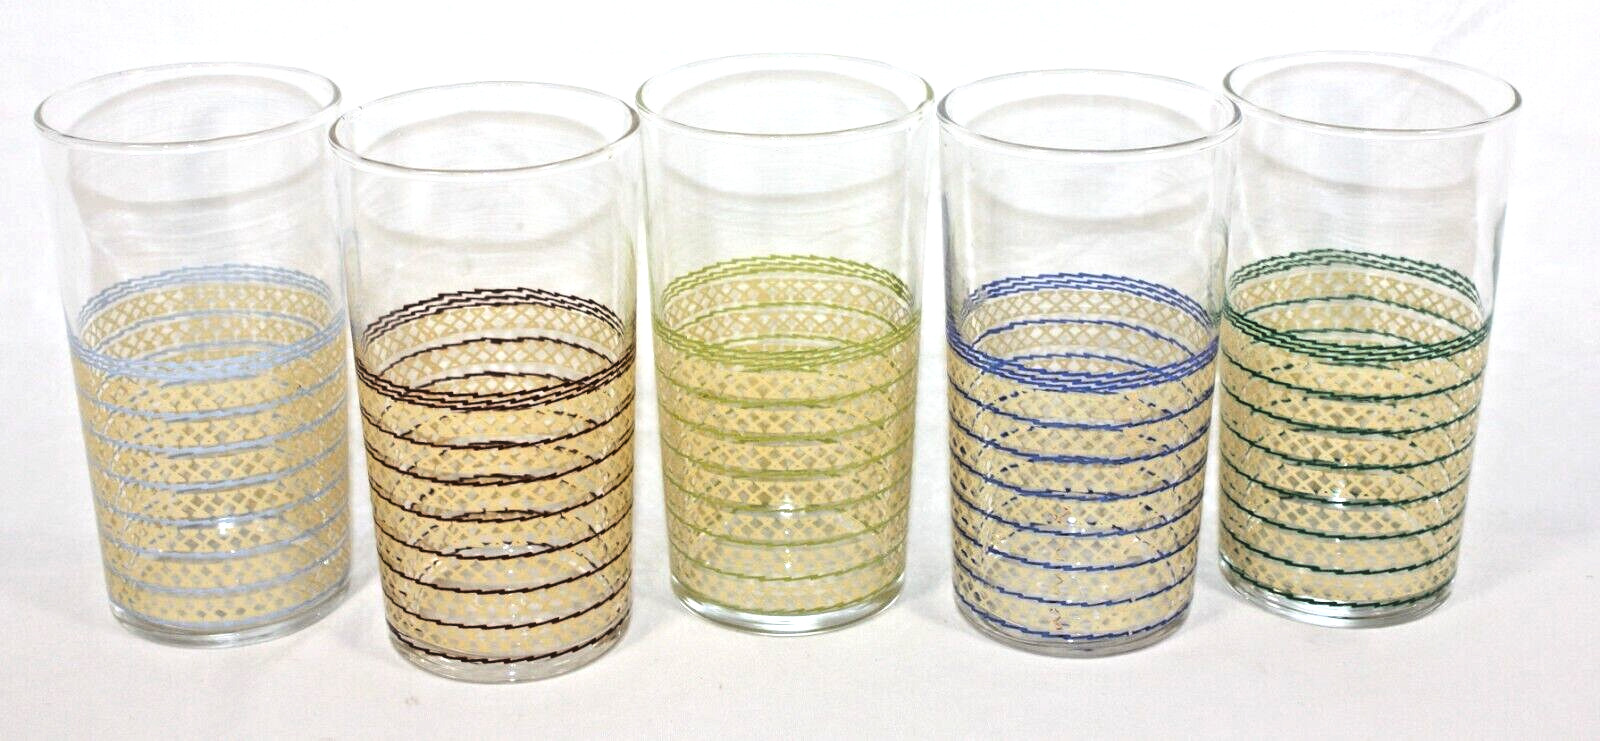 Vintage Juice Glasses Set of 5 Wicker Woven Retro Graphic Mid Century Beverage